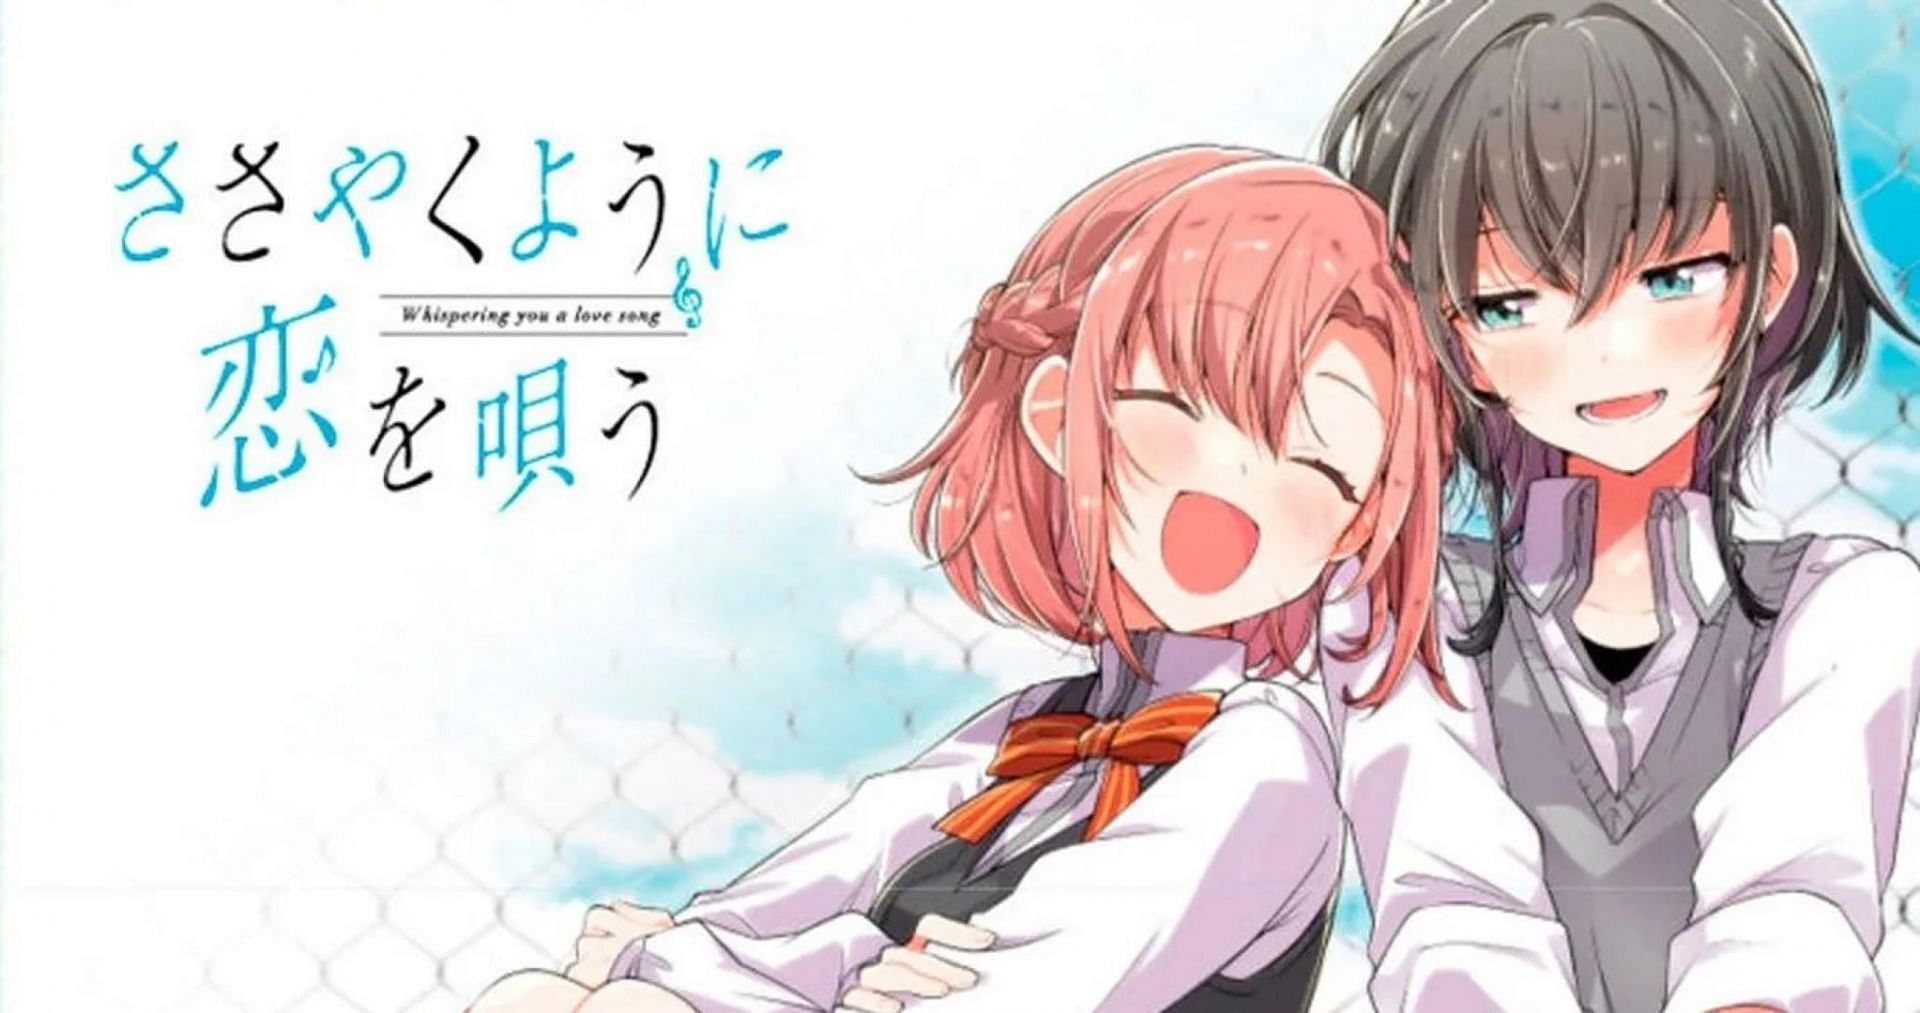 Yuri Manga Whisper Me a Love Song Gets TV Anime Adaptation  Anime India